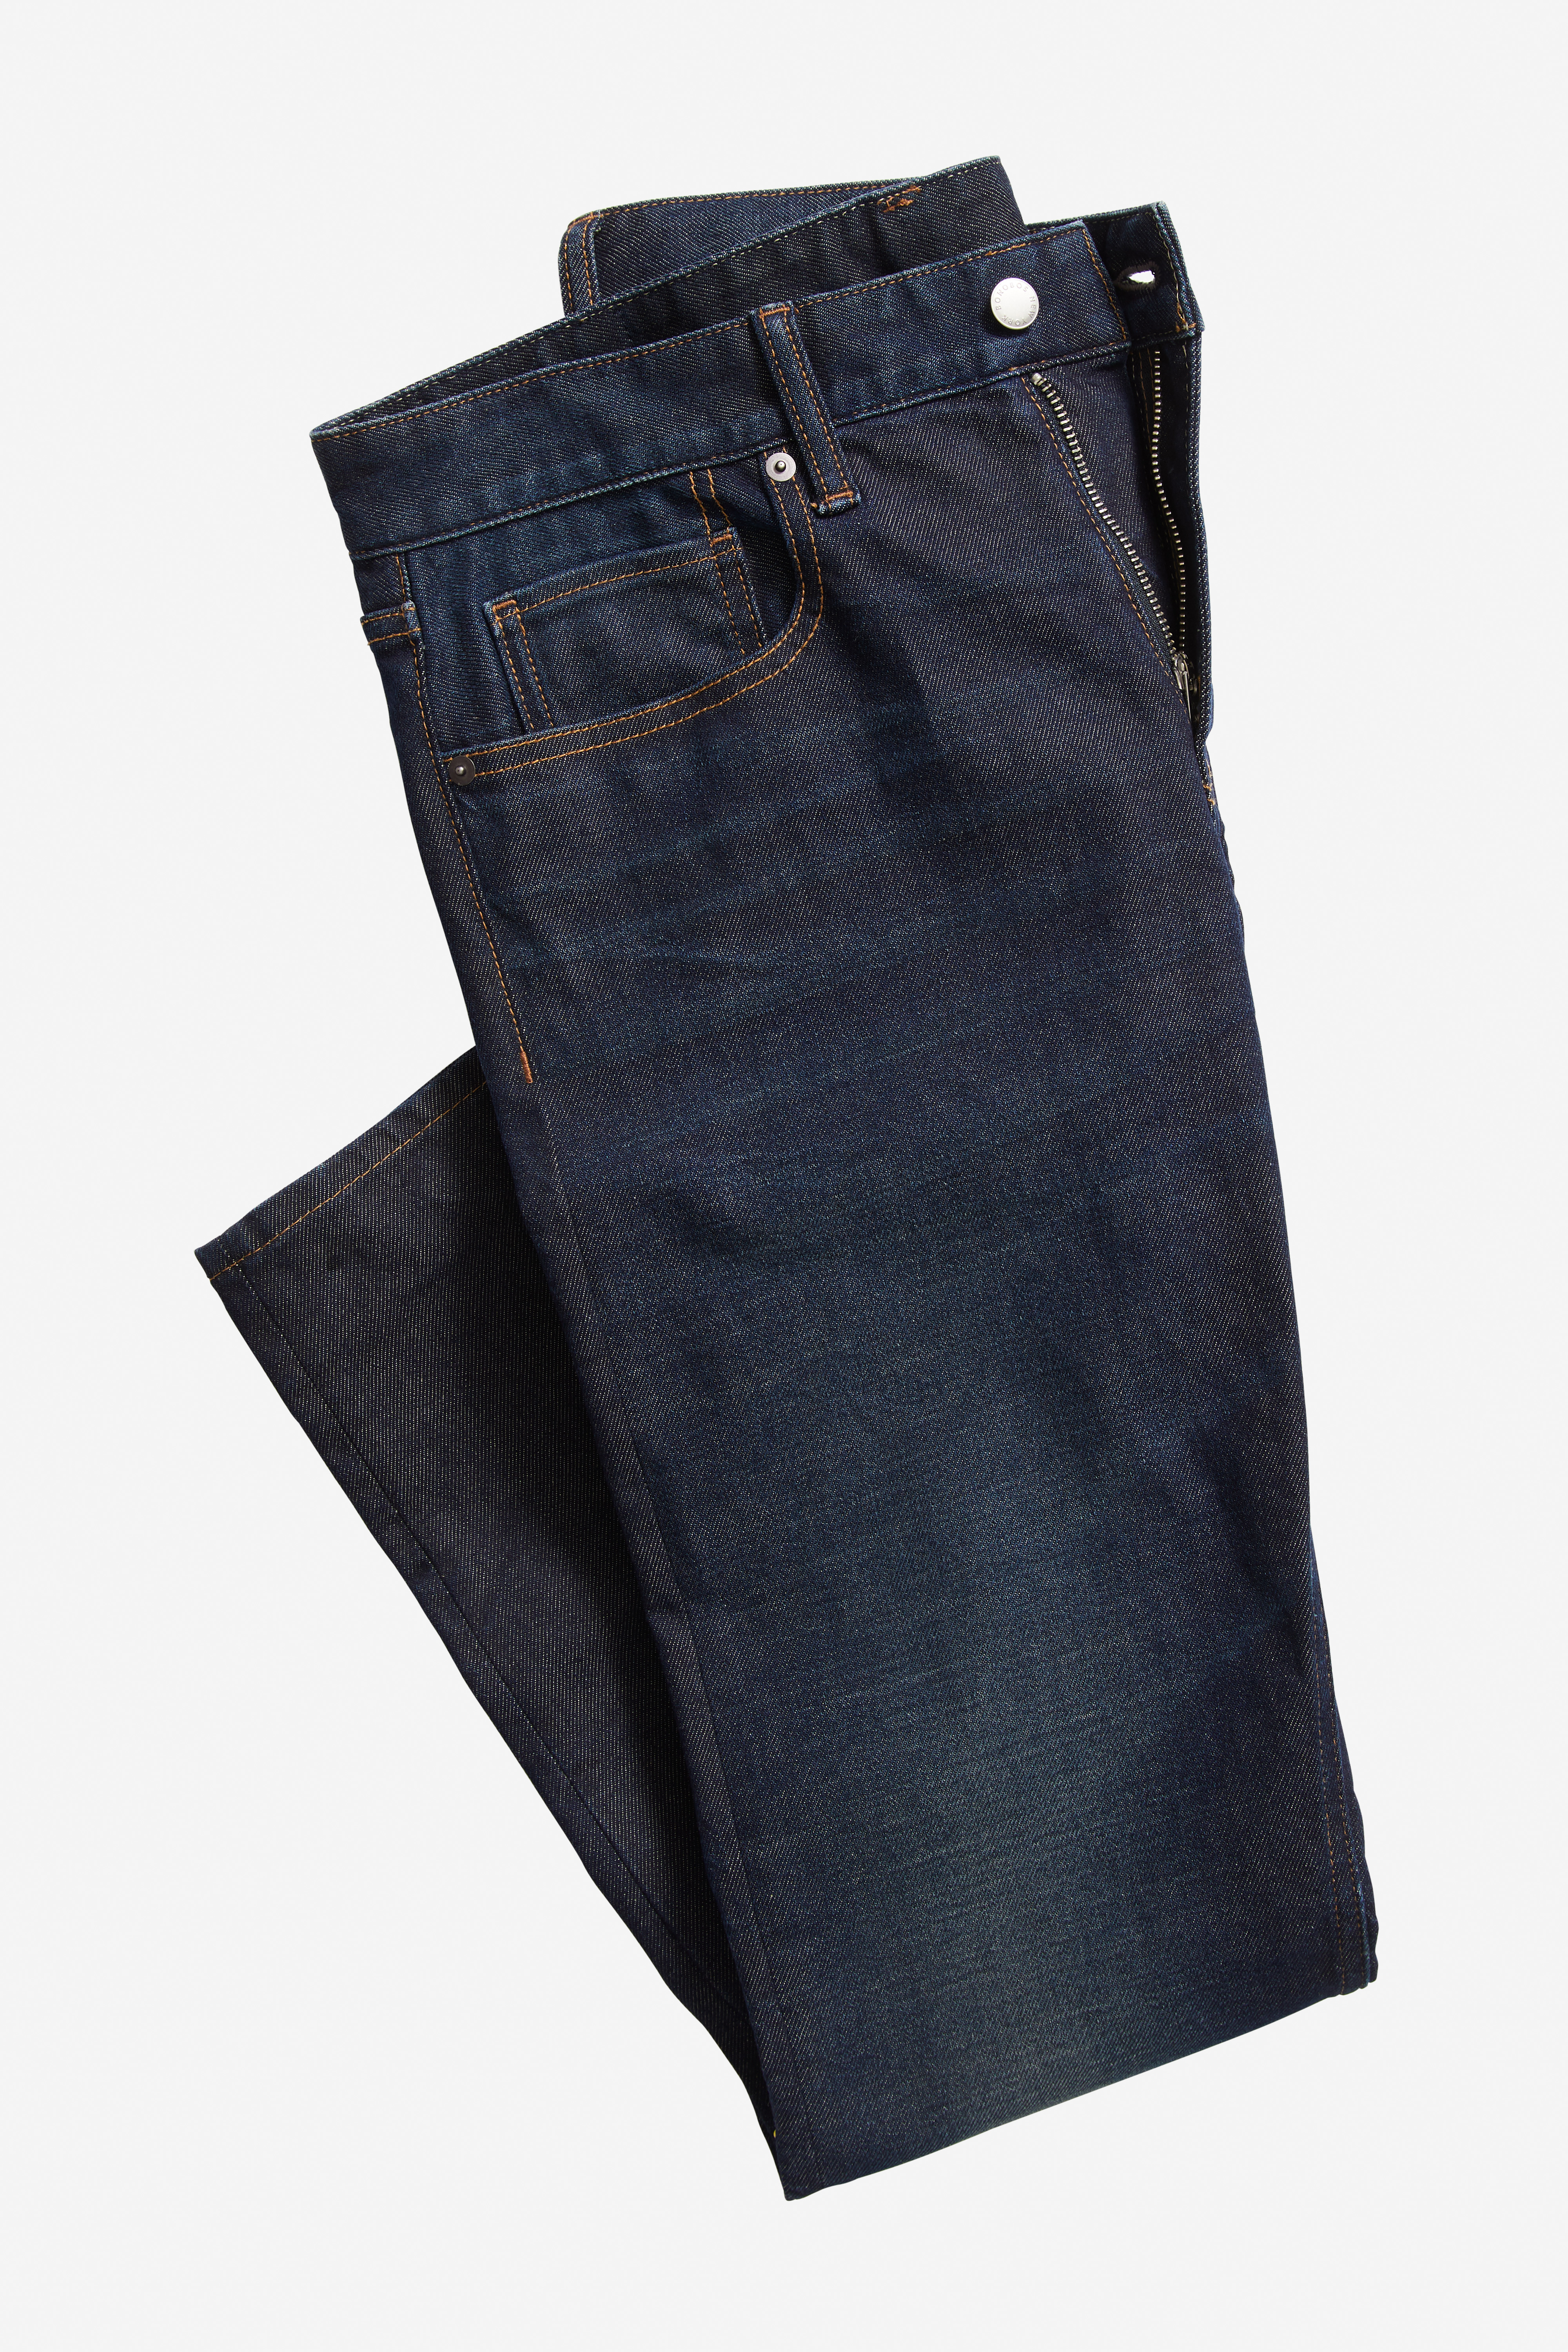 Bonobo Jeans Mens 24x30 Denim Pants Blue Stretch Slim Pants NWOT N18